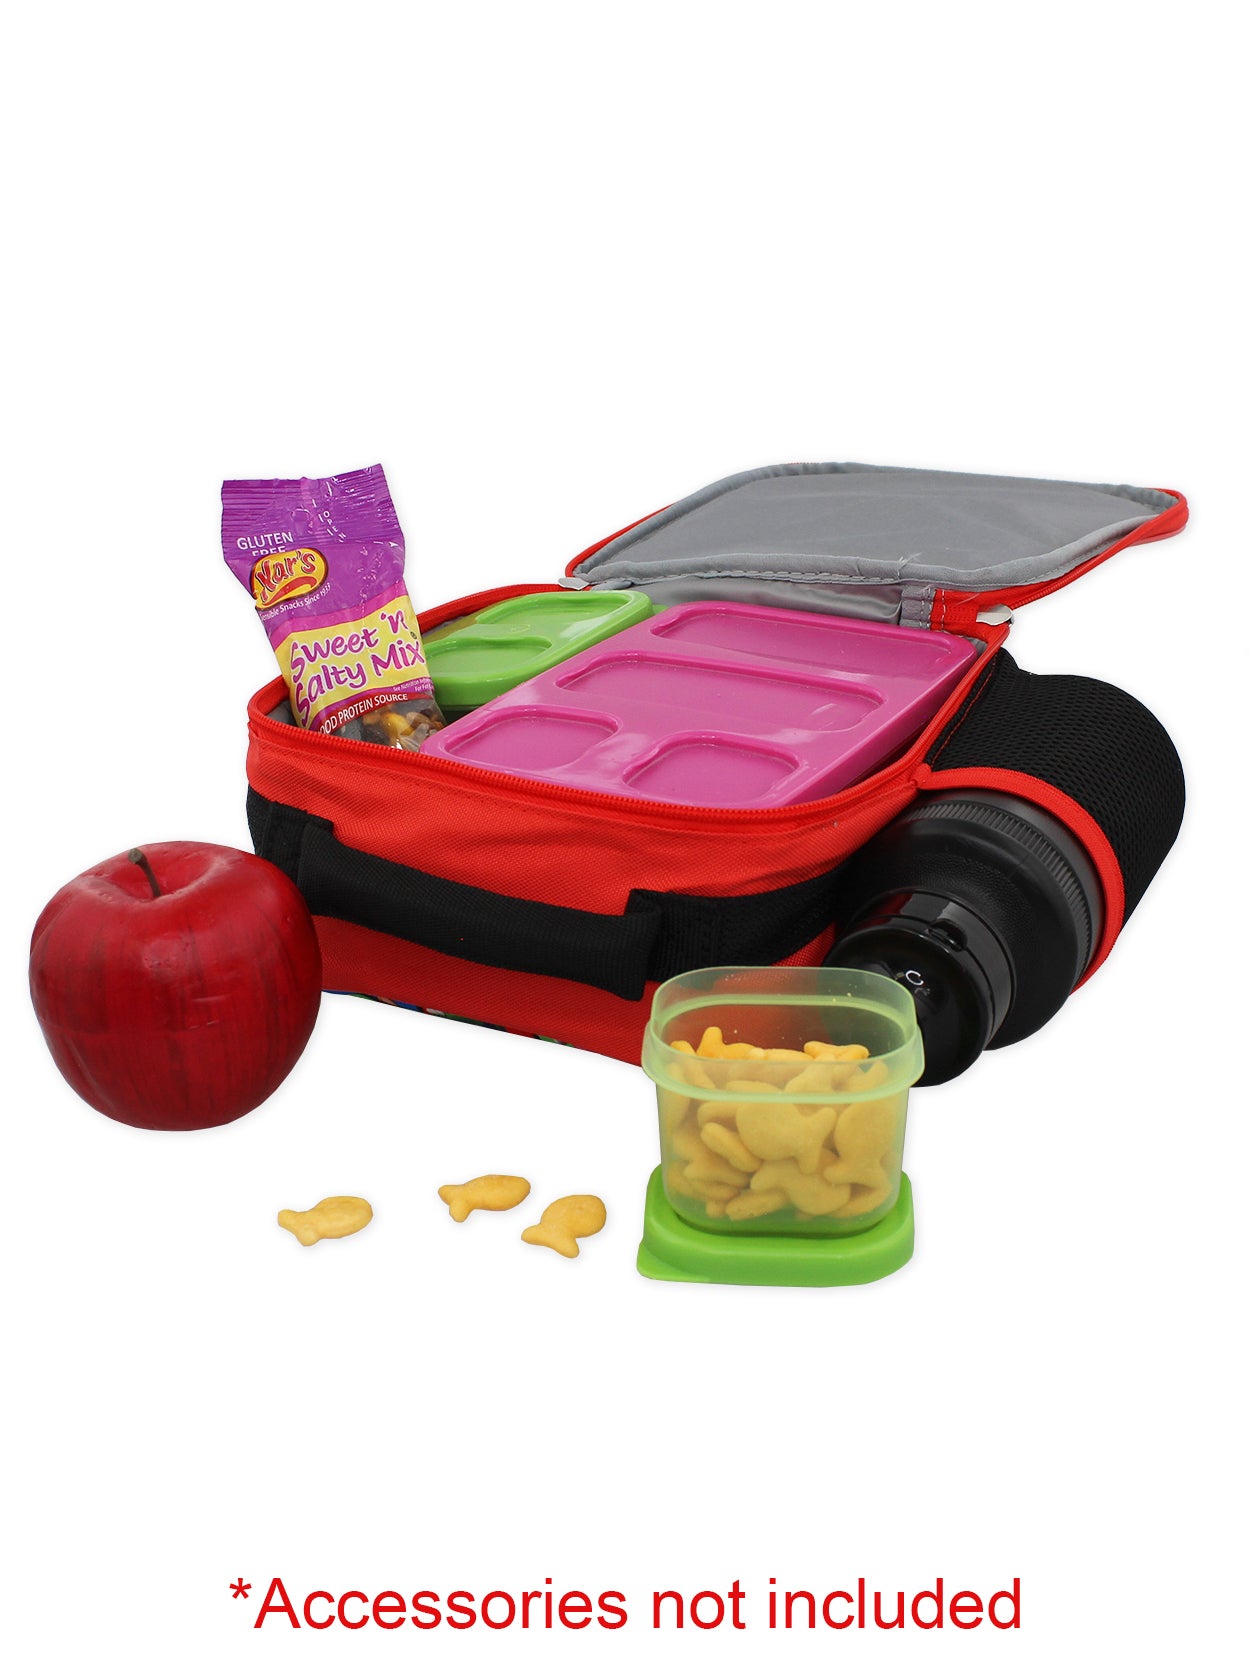 SUPER MARIO BROS. LUIGI YOSHI Kids BPA-Free Insulated Lunch Tote Bag Box  NWT $20